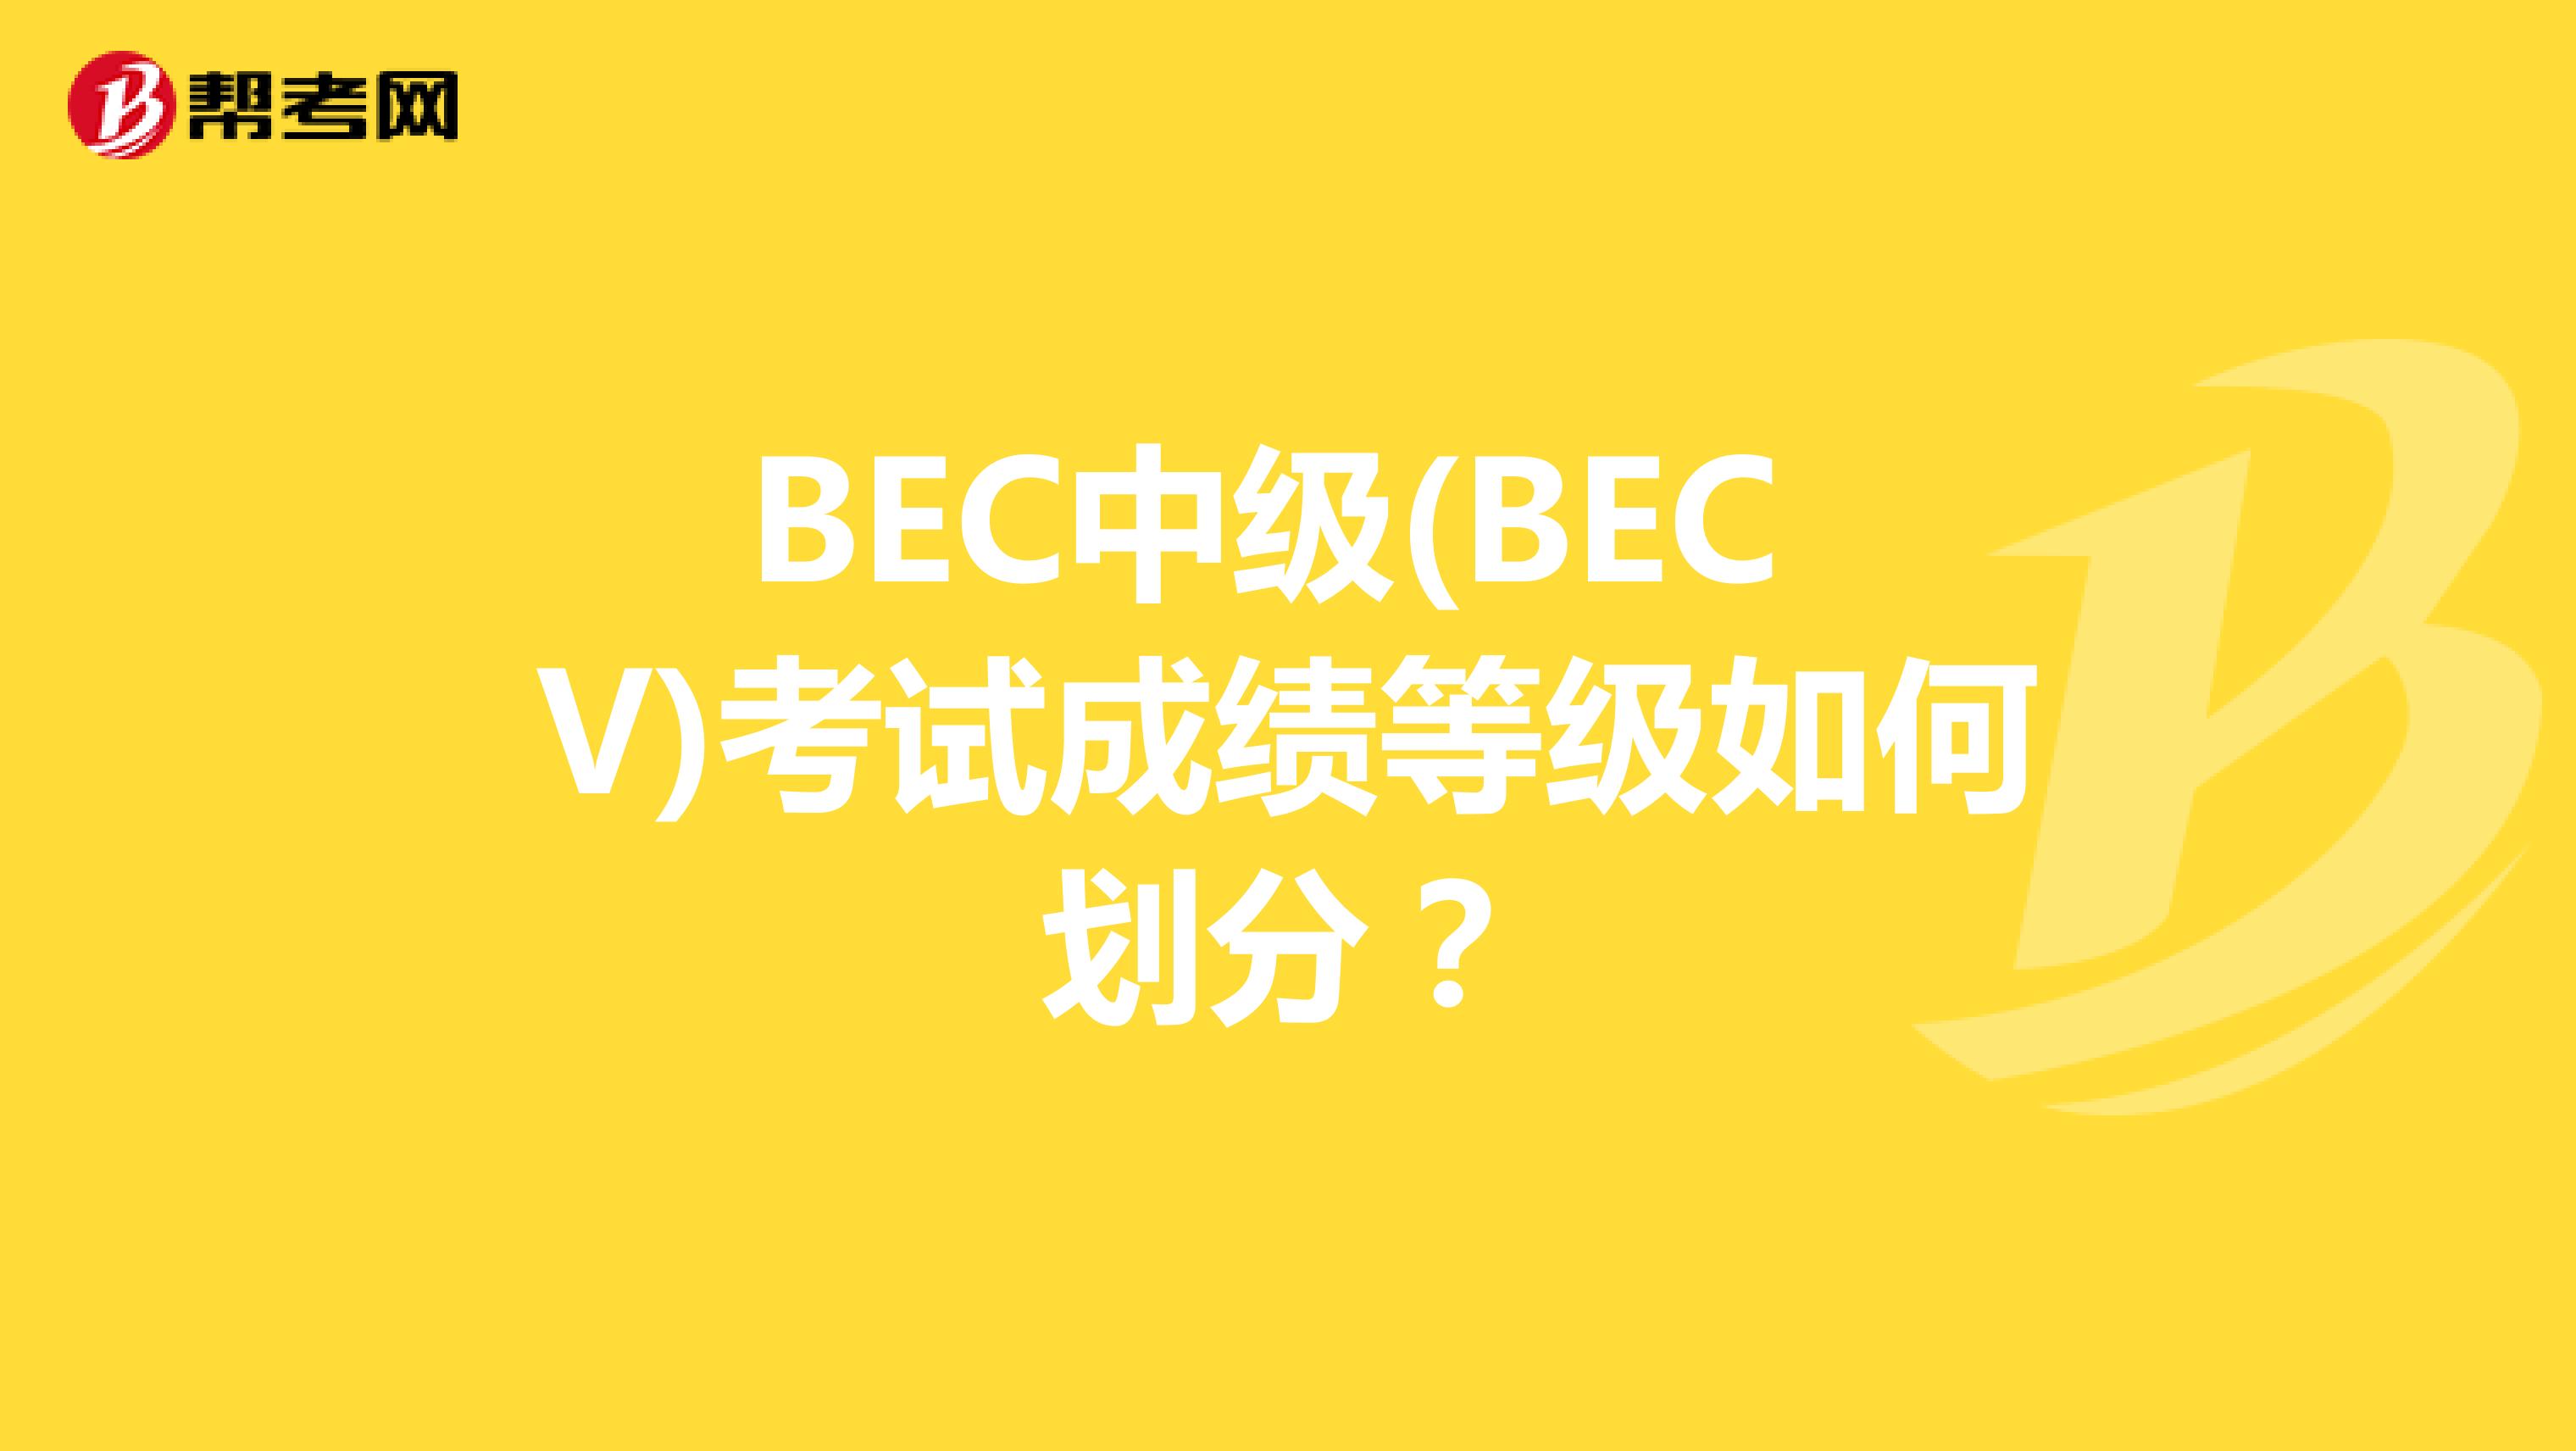 BEC中级(BEC V)考试成绩等级如何划分？